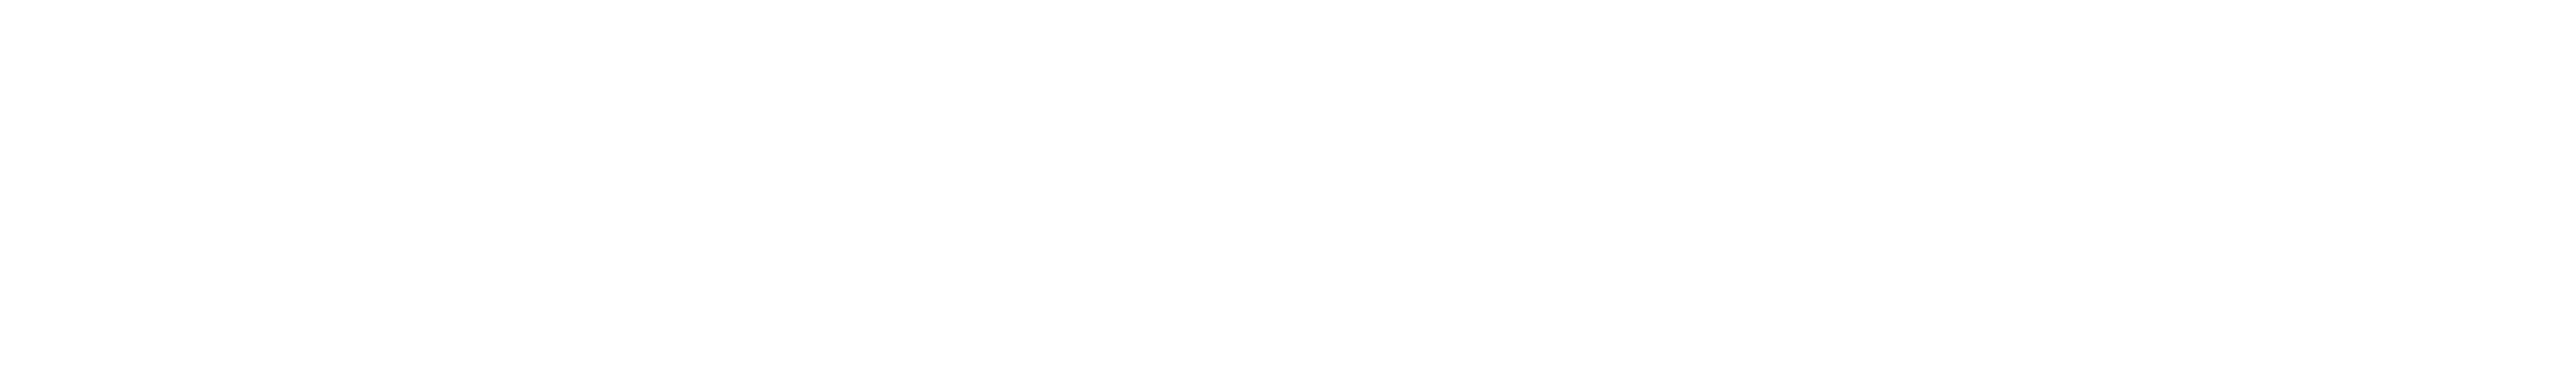 Logos of UMass Amherst, Carnegie Mellon, MIT, UChicago, Wisconsin, and UCLA.